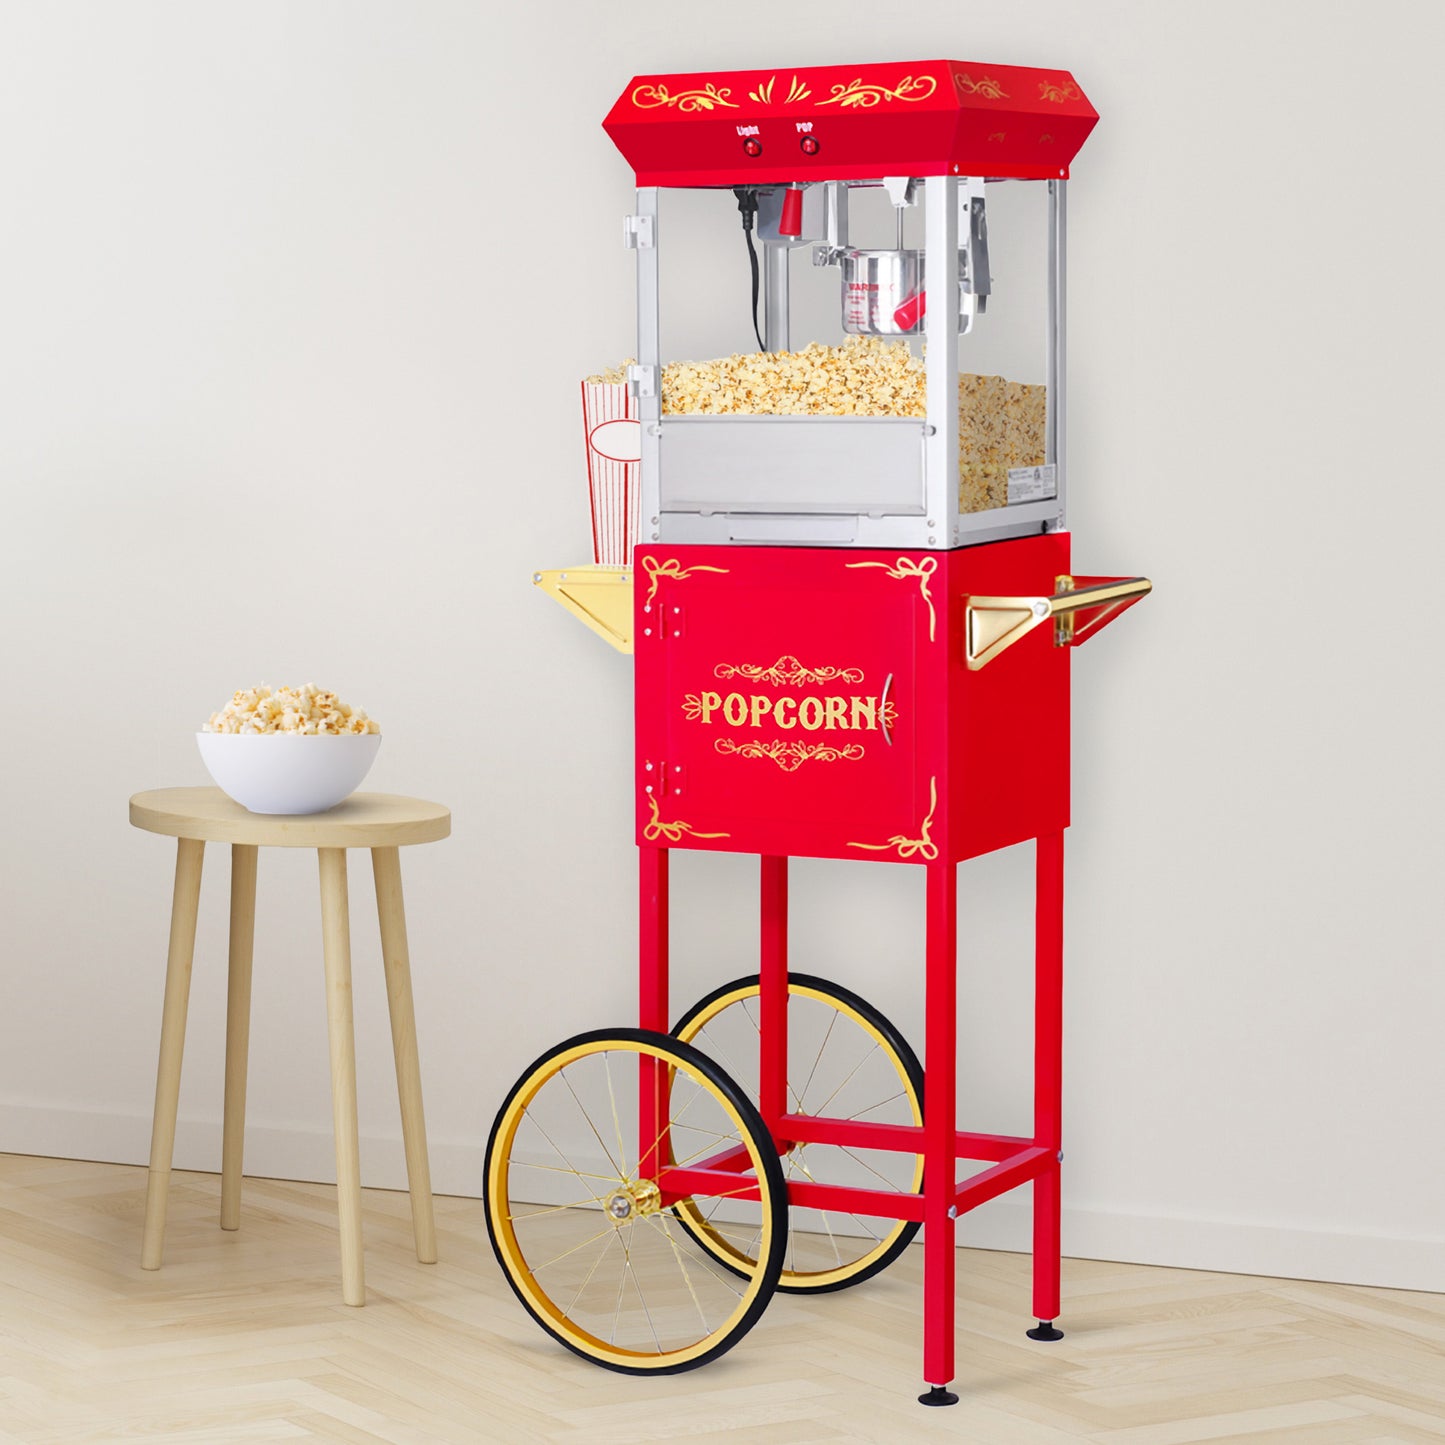 Popcorn Kits for 6oz Popcorn Machine, 36ct